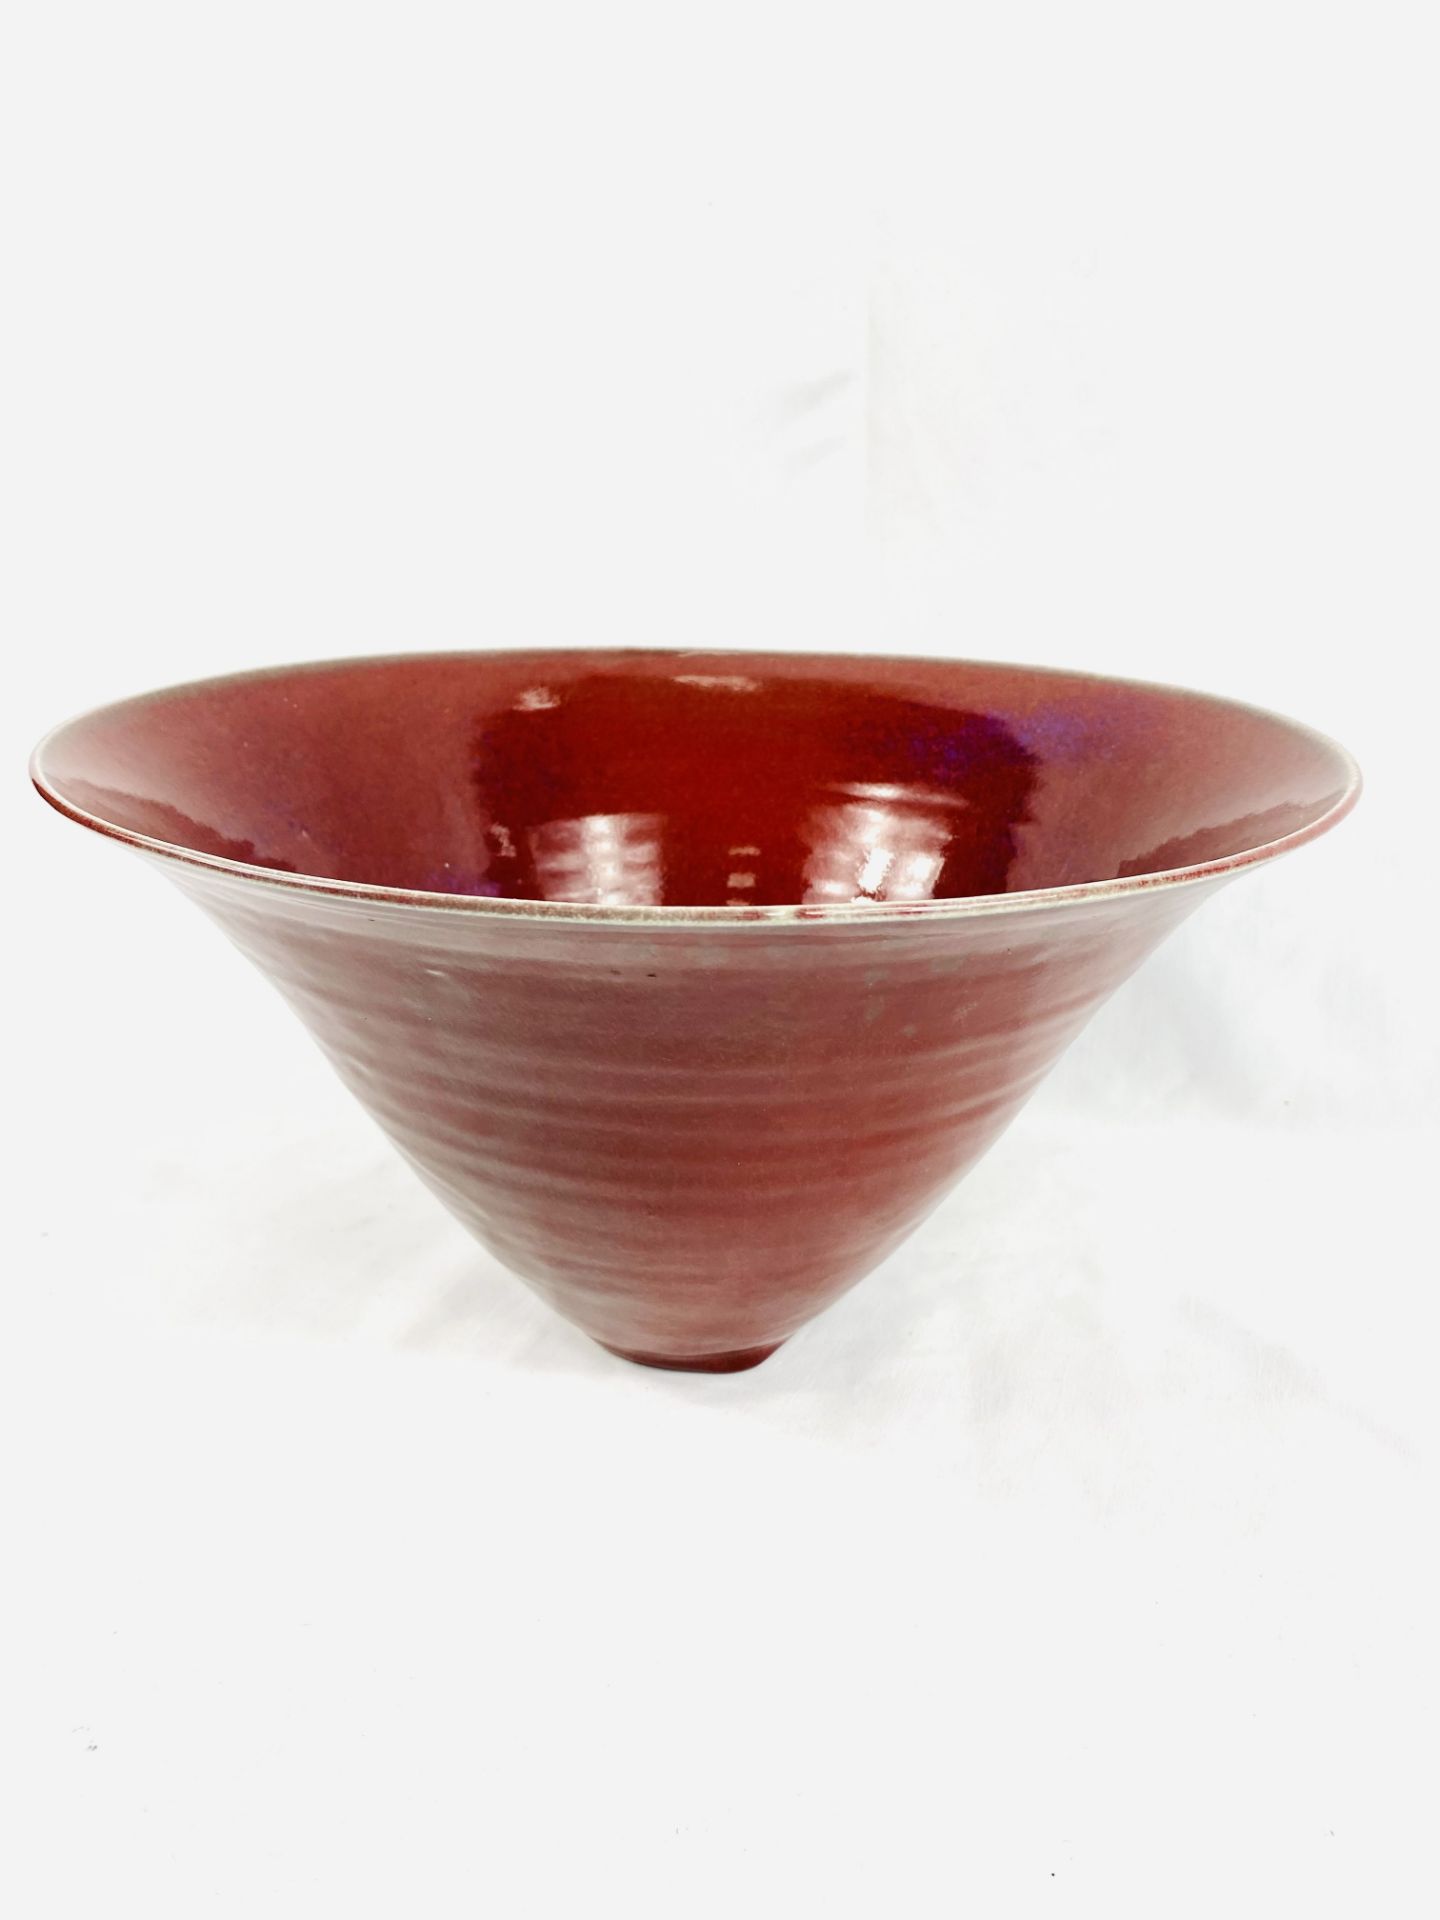 Ned Heywood Chepstow ceramic bowl - Image 3 of 4